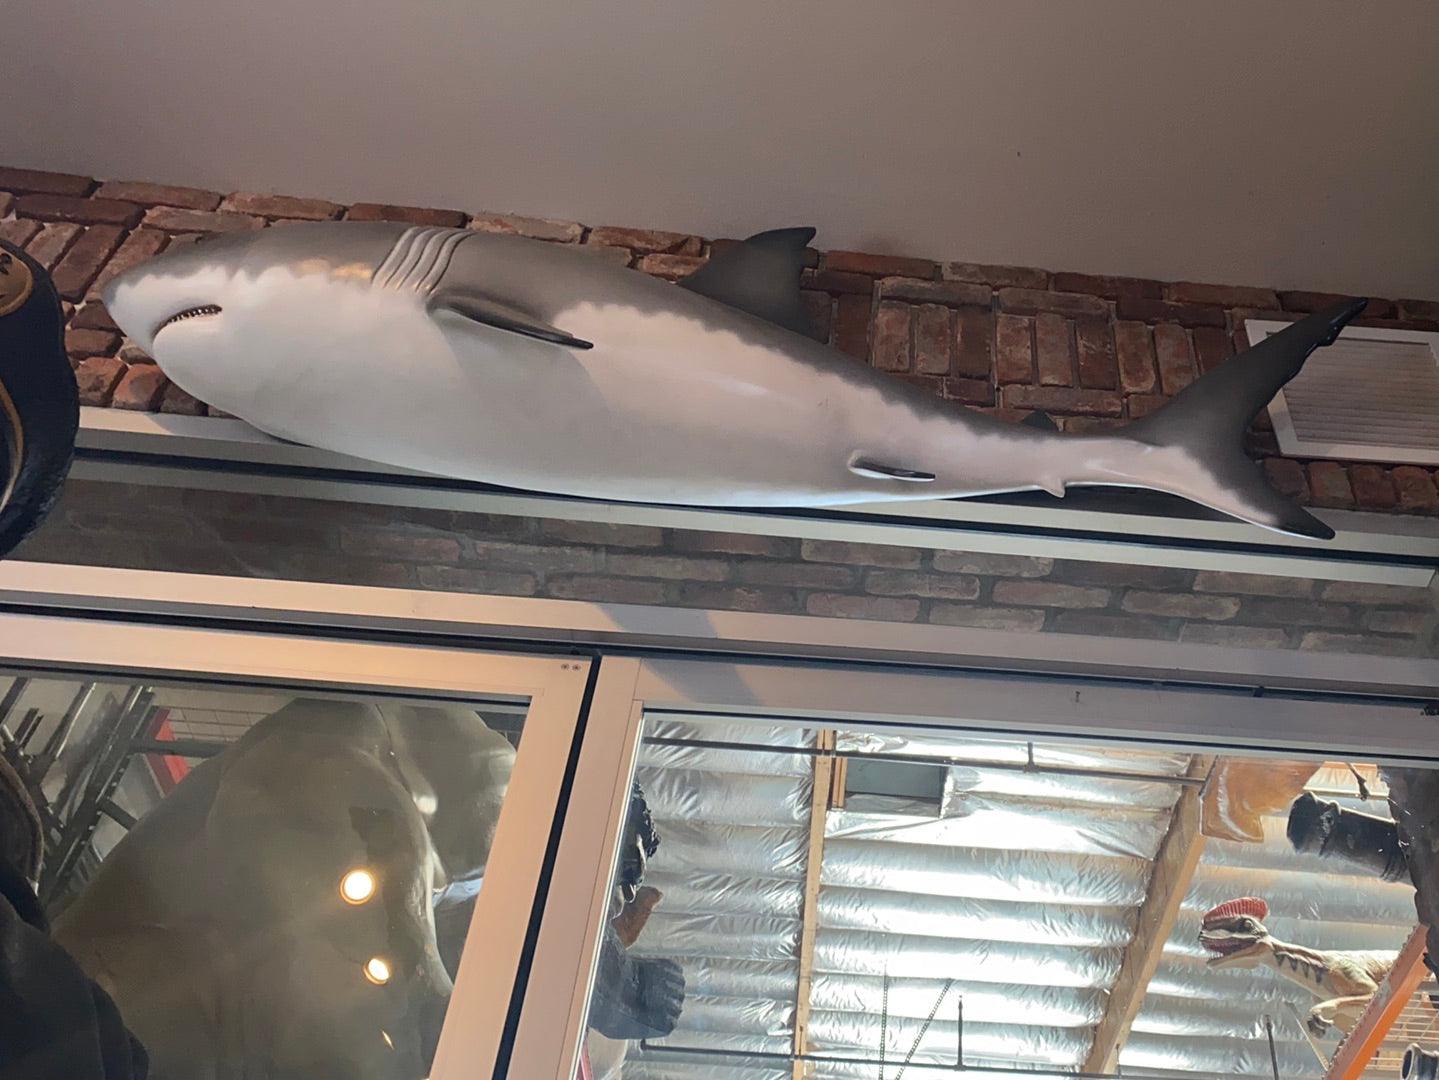 Shark Wall Decor Statue